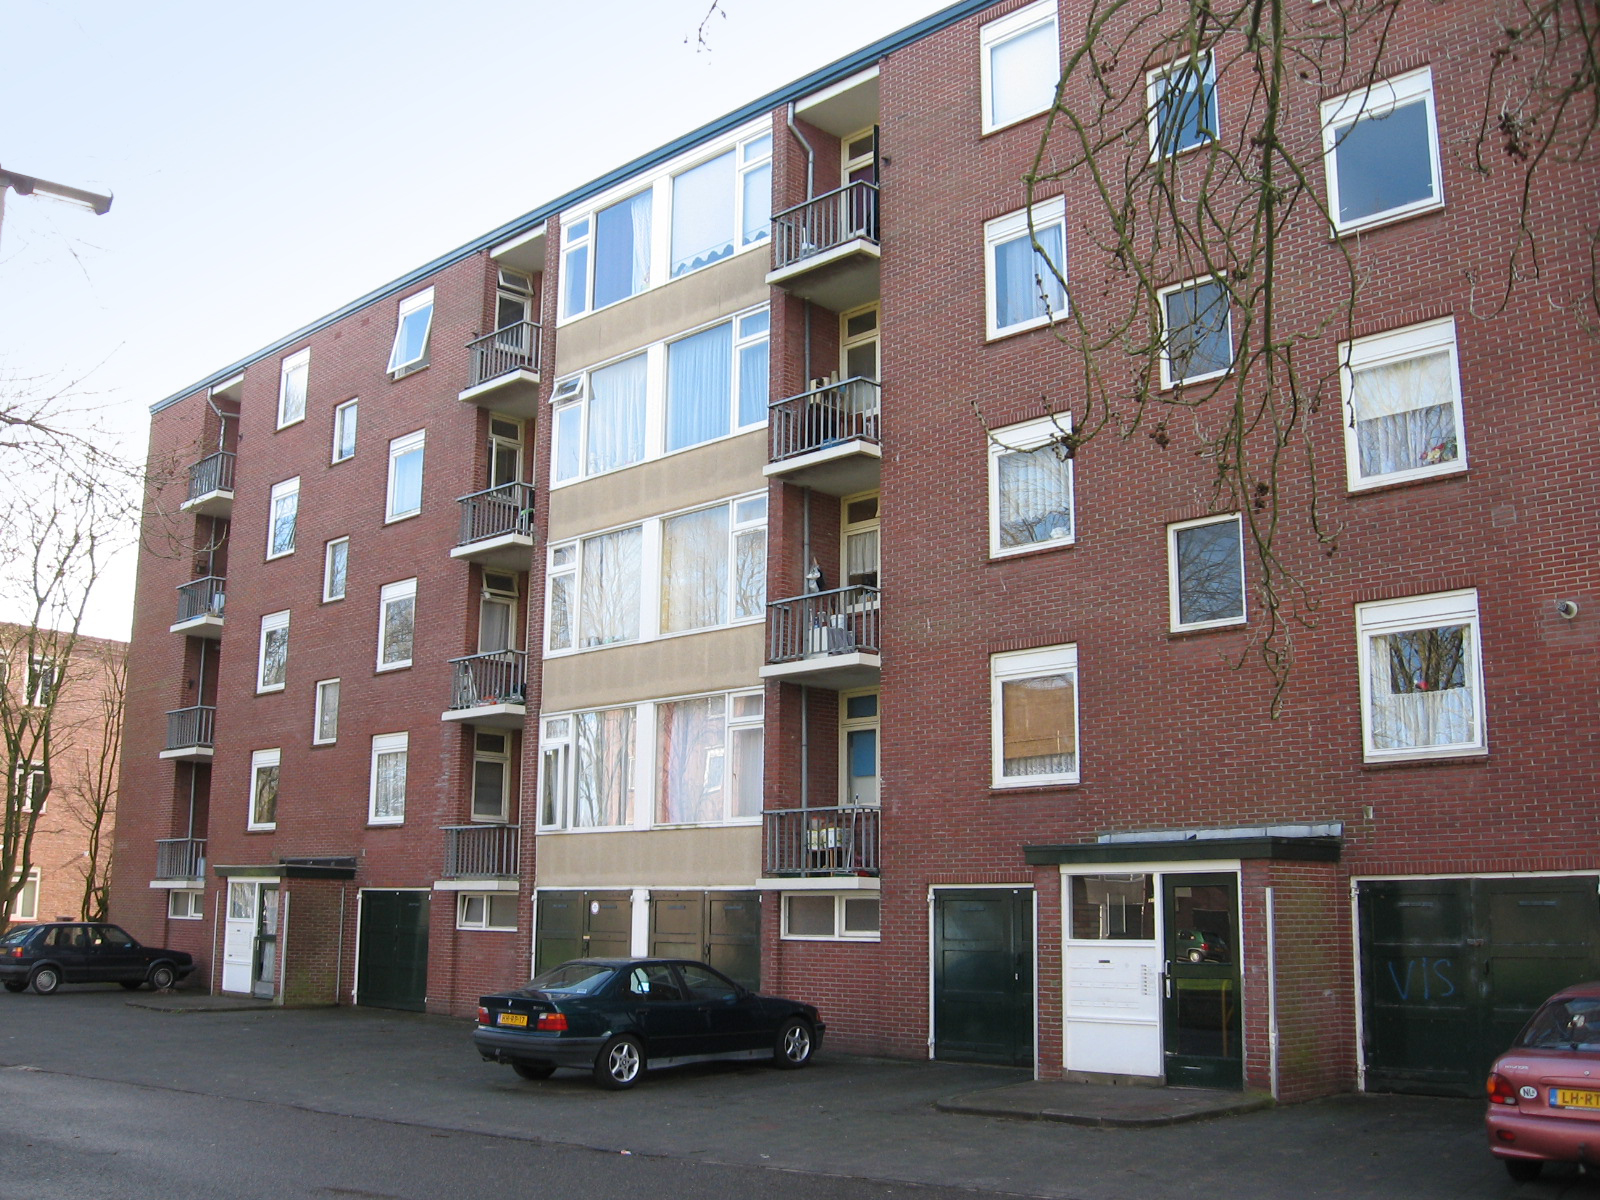 Jan Steenstraat 93, 7606 XW Almelo, Nederland